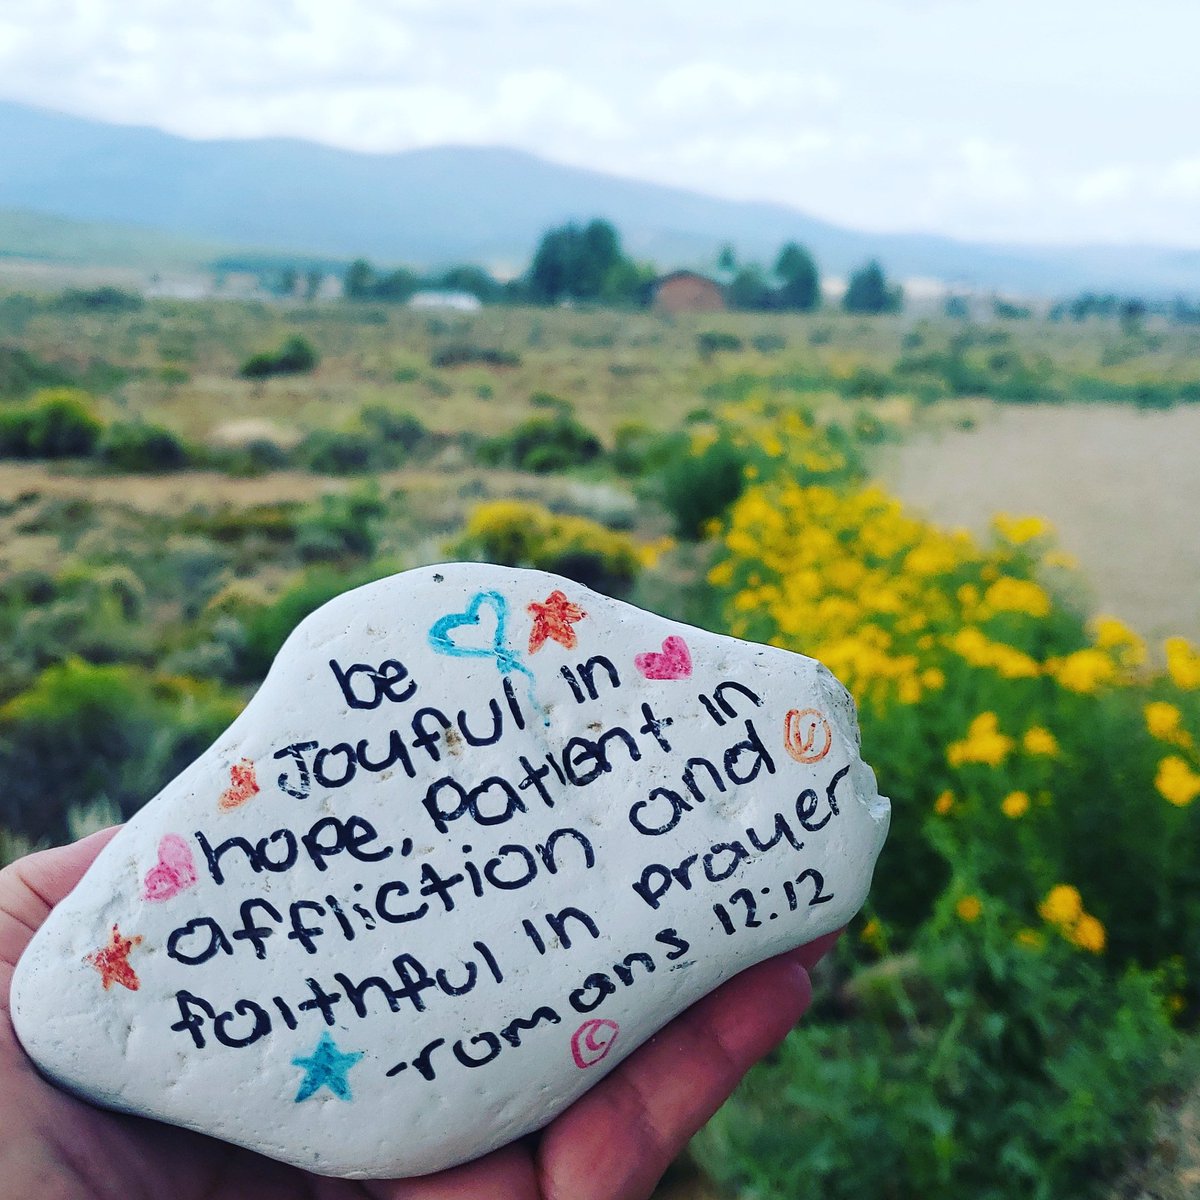 Painted Rock scriptures left at campgrounds. 📖💌💕

#FaithLoveAdventure #RVChristianCommunity
#ChristianRVCommunity 
#RVCommunity 
#JesusLovesYou 
#HolySpirit 
#Faith
#Hope
#Love
#Peace 
#Joy
#Travel